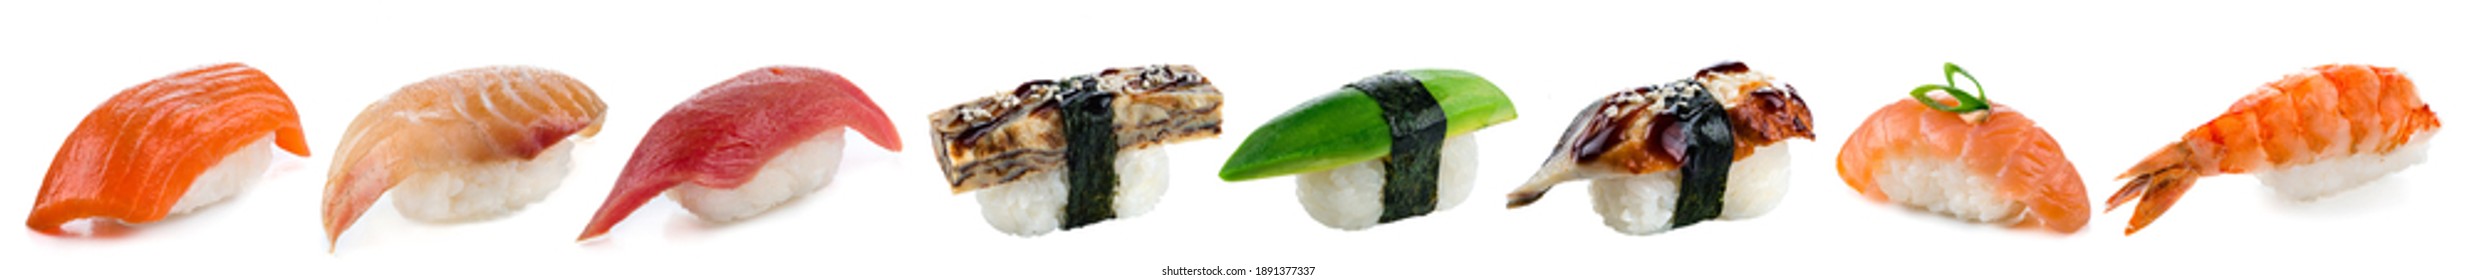 sushi set - japan cousine. Sushi nigiri collection isolated on white background. Delicious seafood, sushi restaurant concept